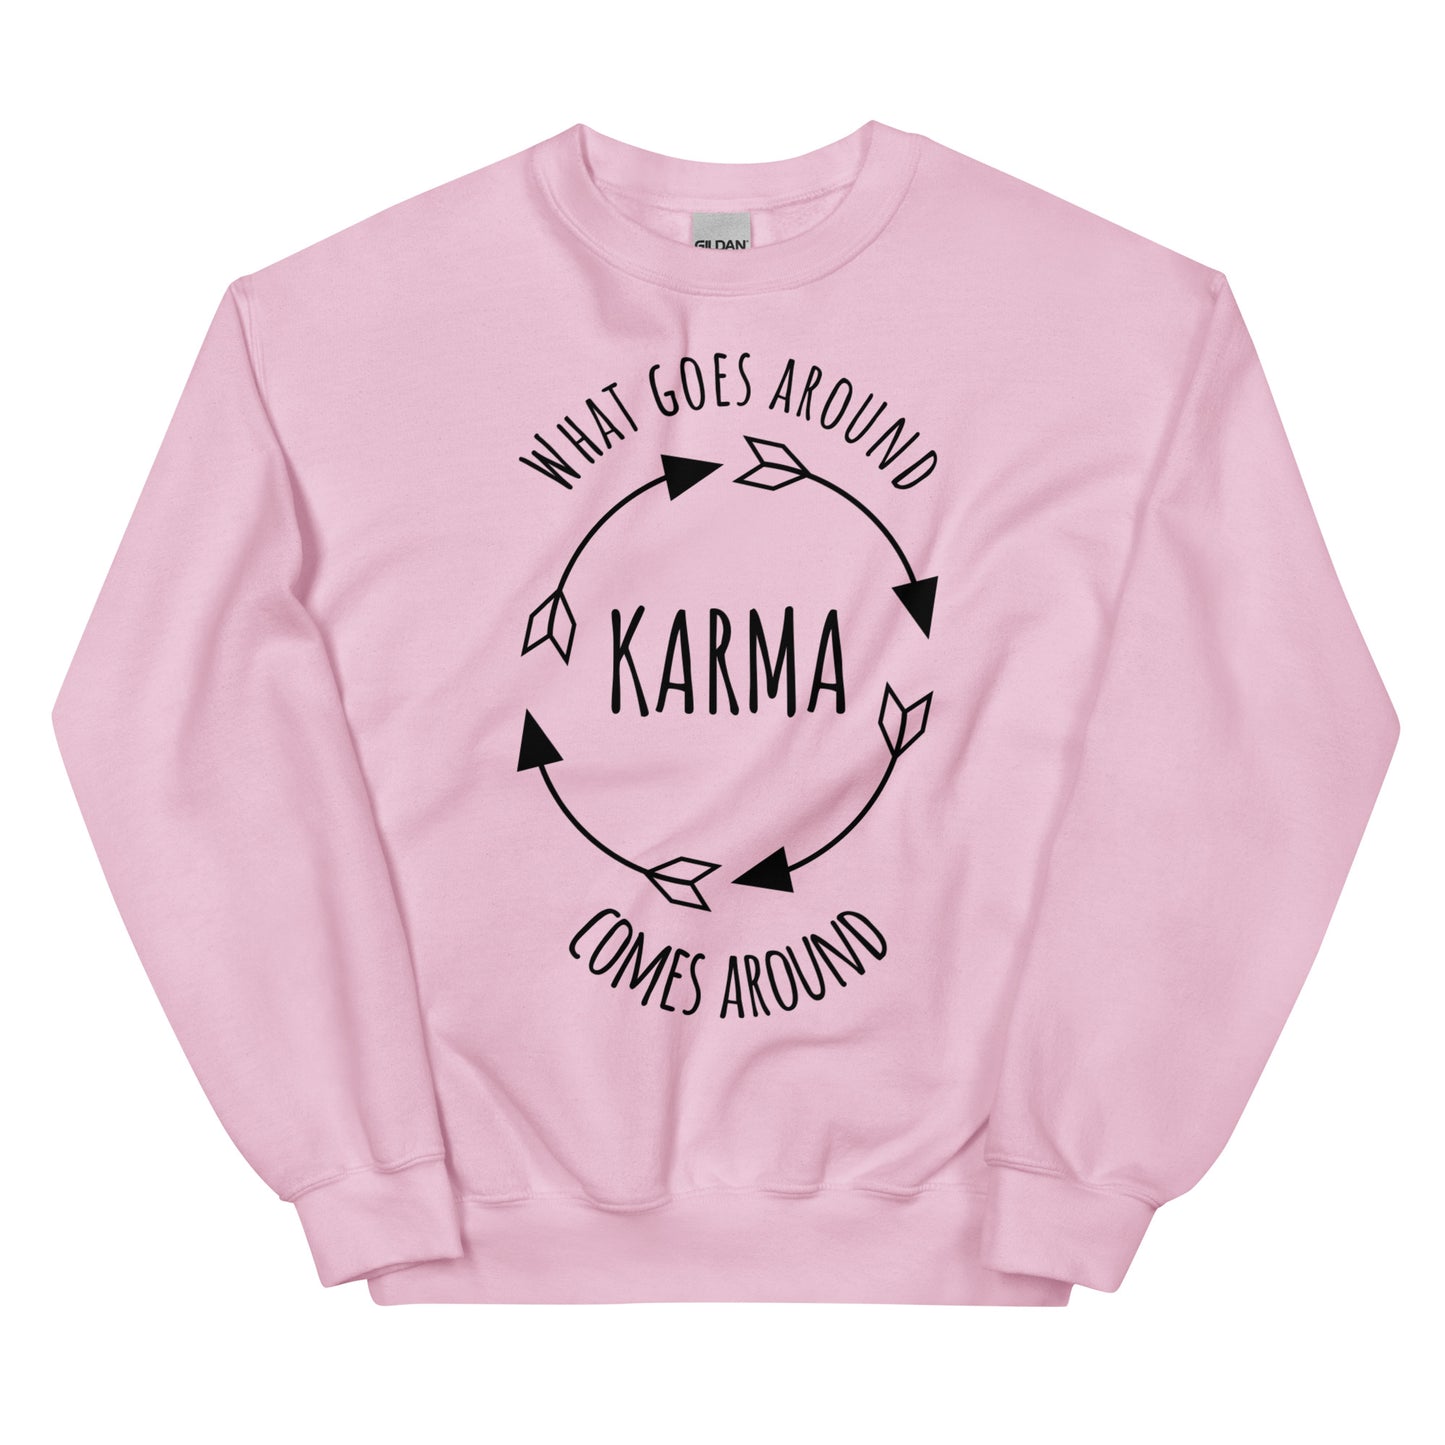 KARMA - what goes around comes around Unisex Crew Neck Sweatshirt (black lettering)